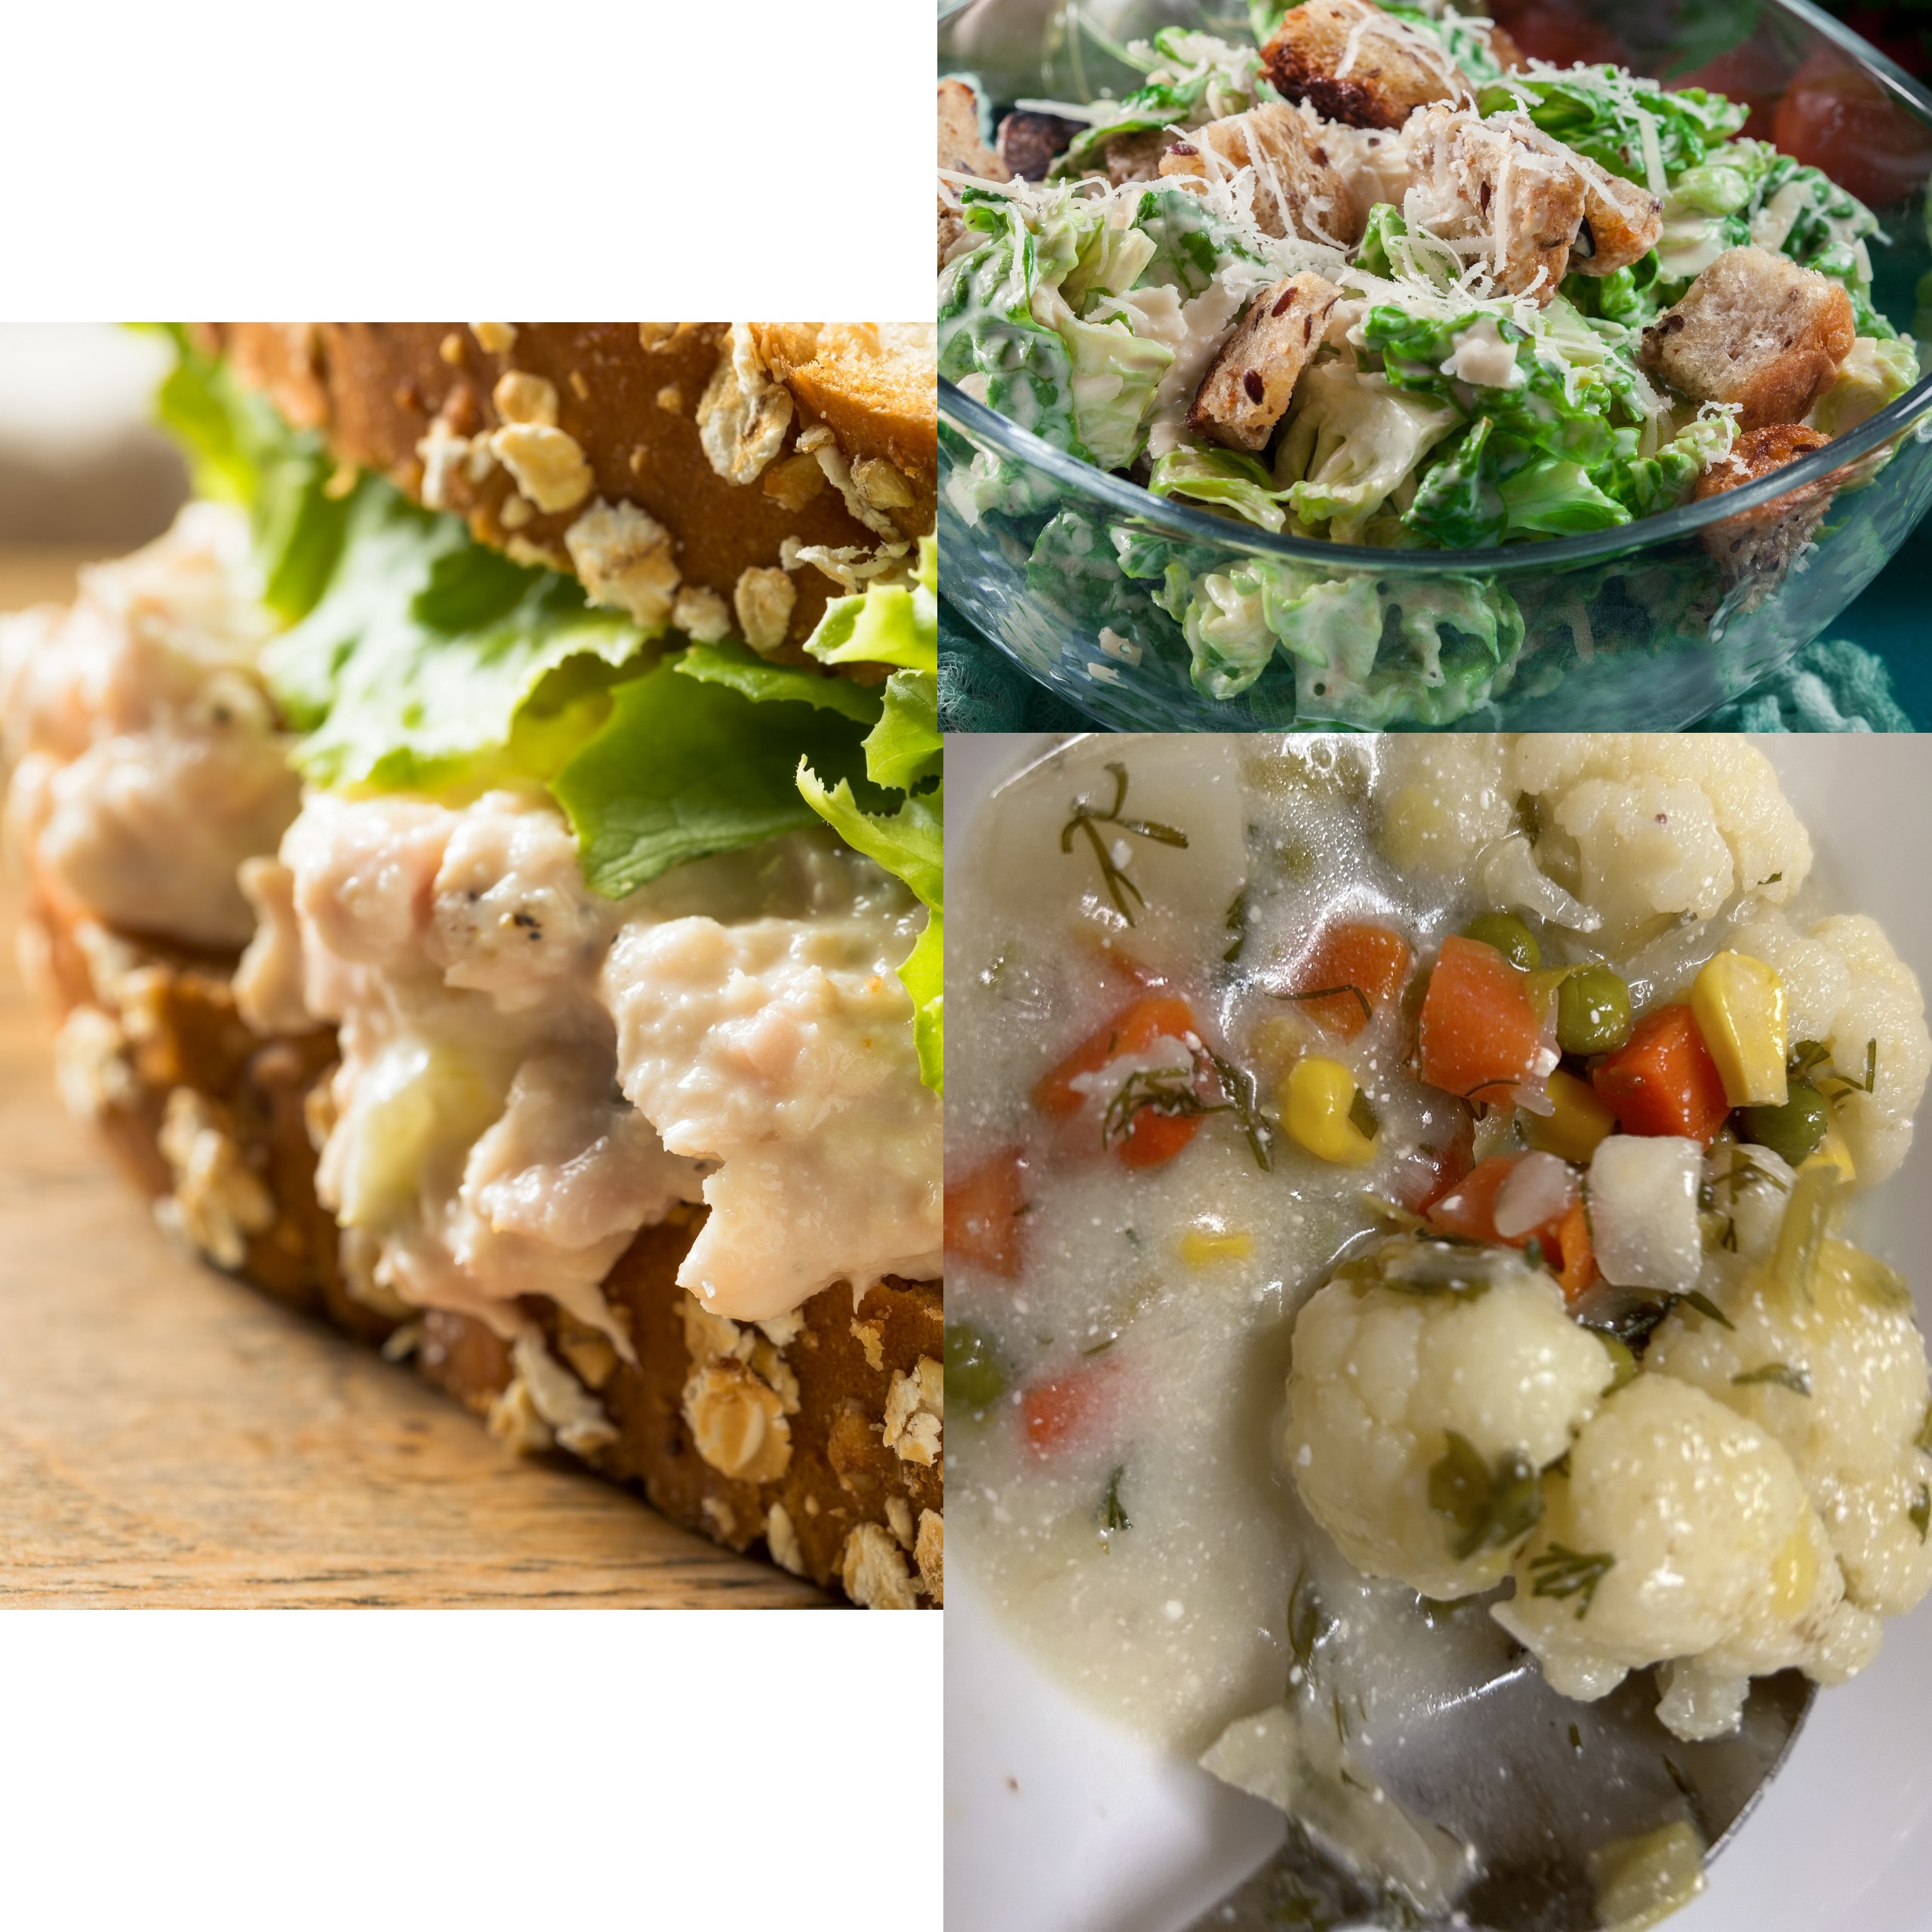 Homemade tuna salad sandwich combo with cauliflower veggie soup or caesar salad.